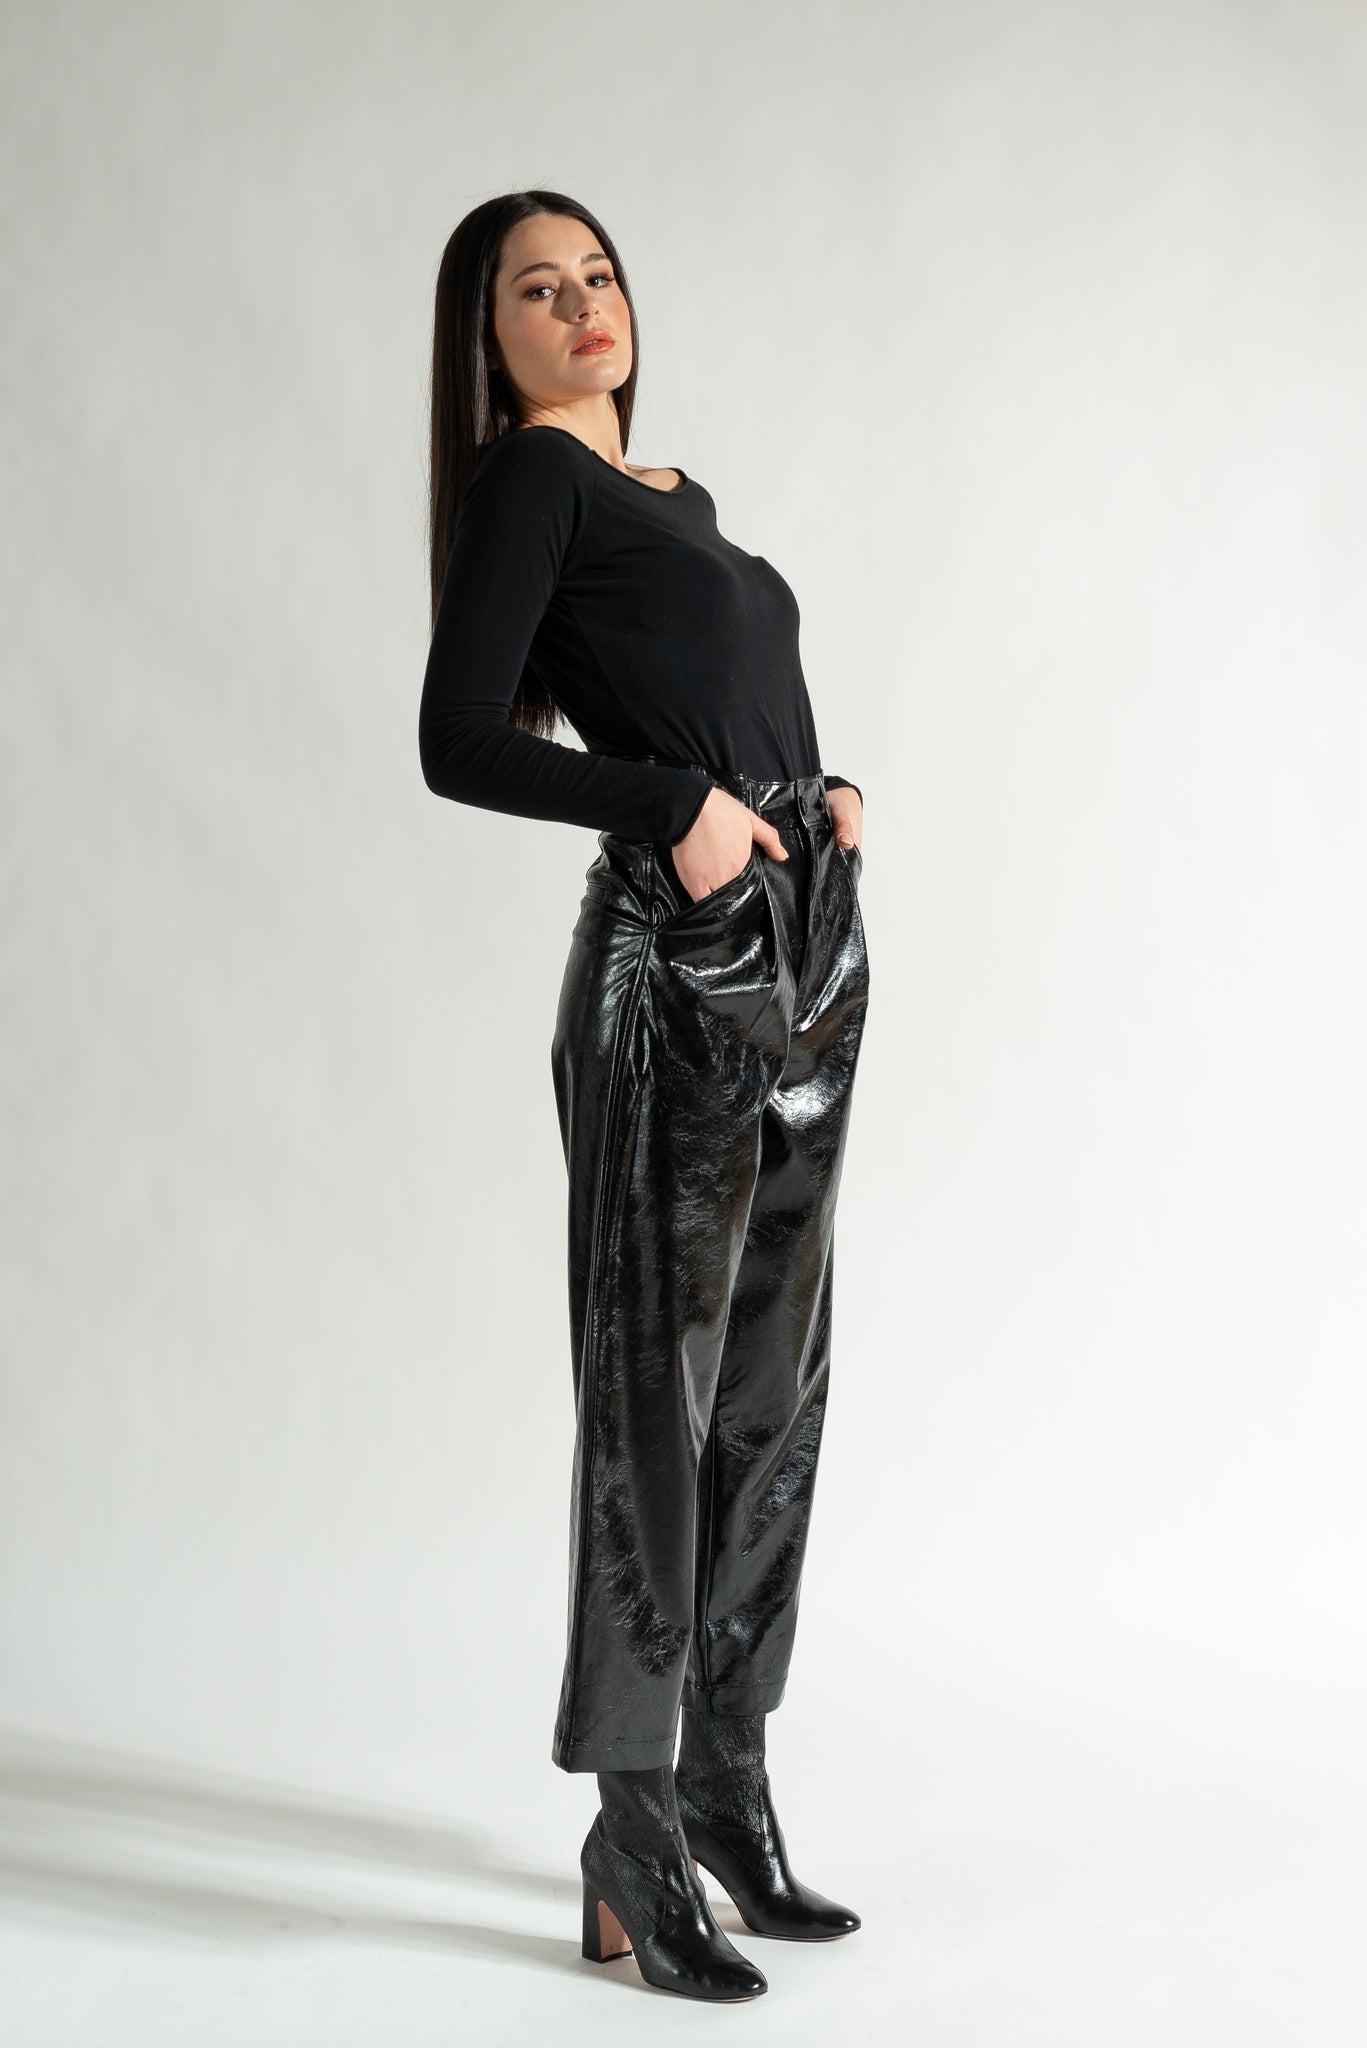 ZARA Black Faux Leather Short Patent Dress New Size Medium